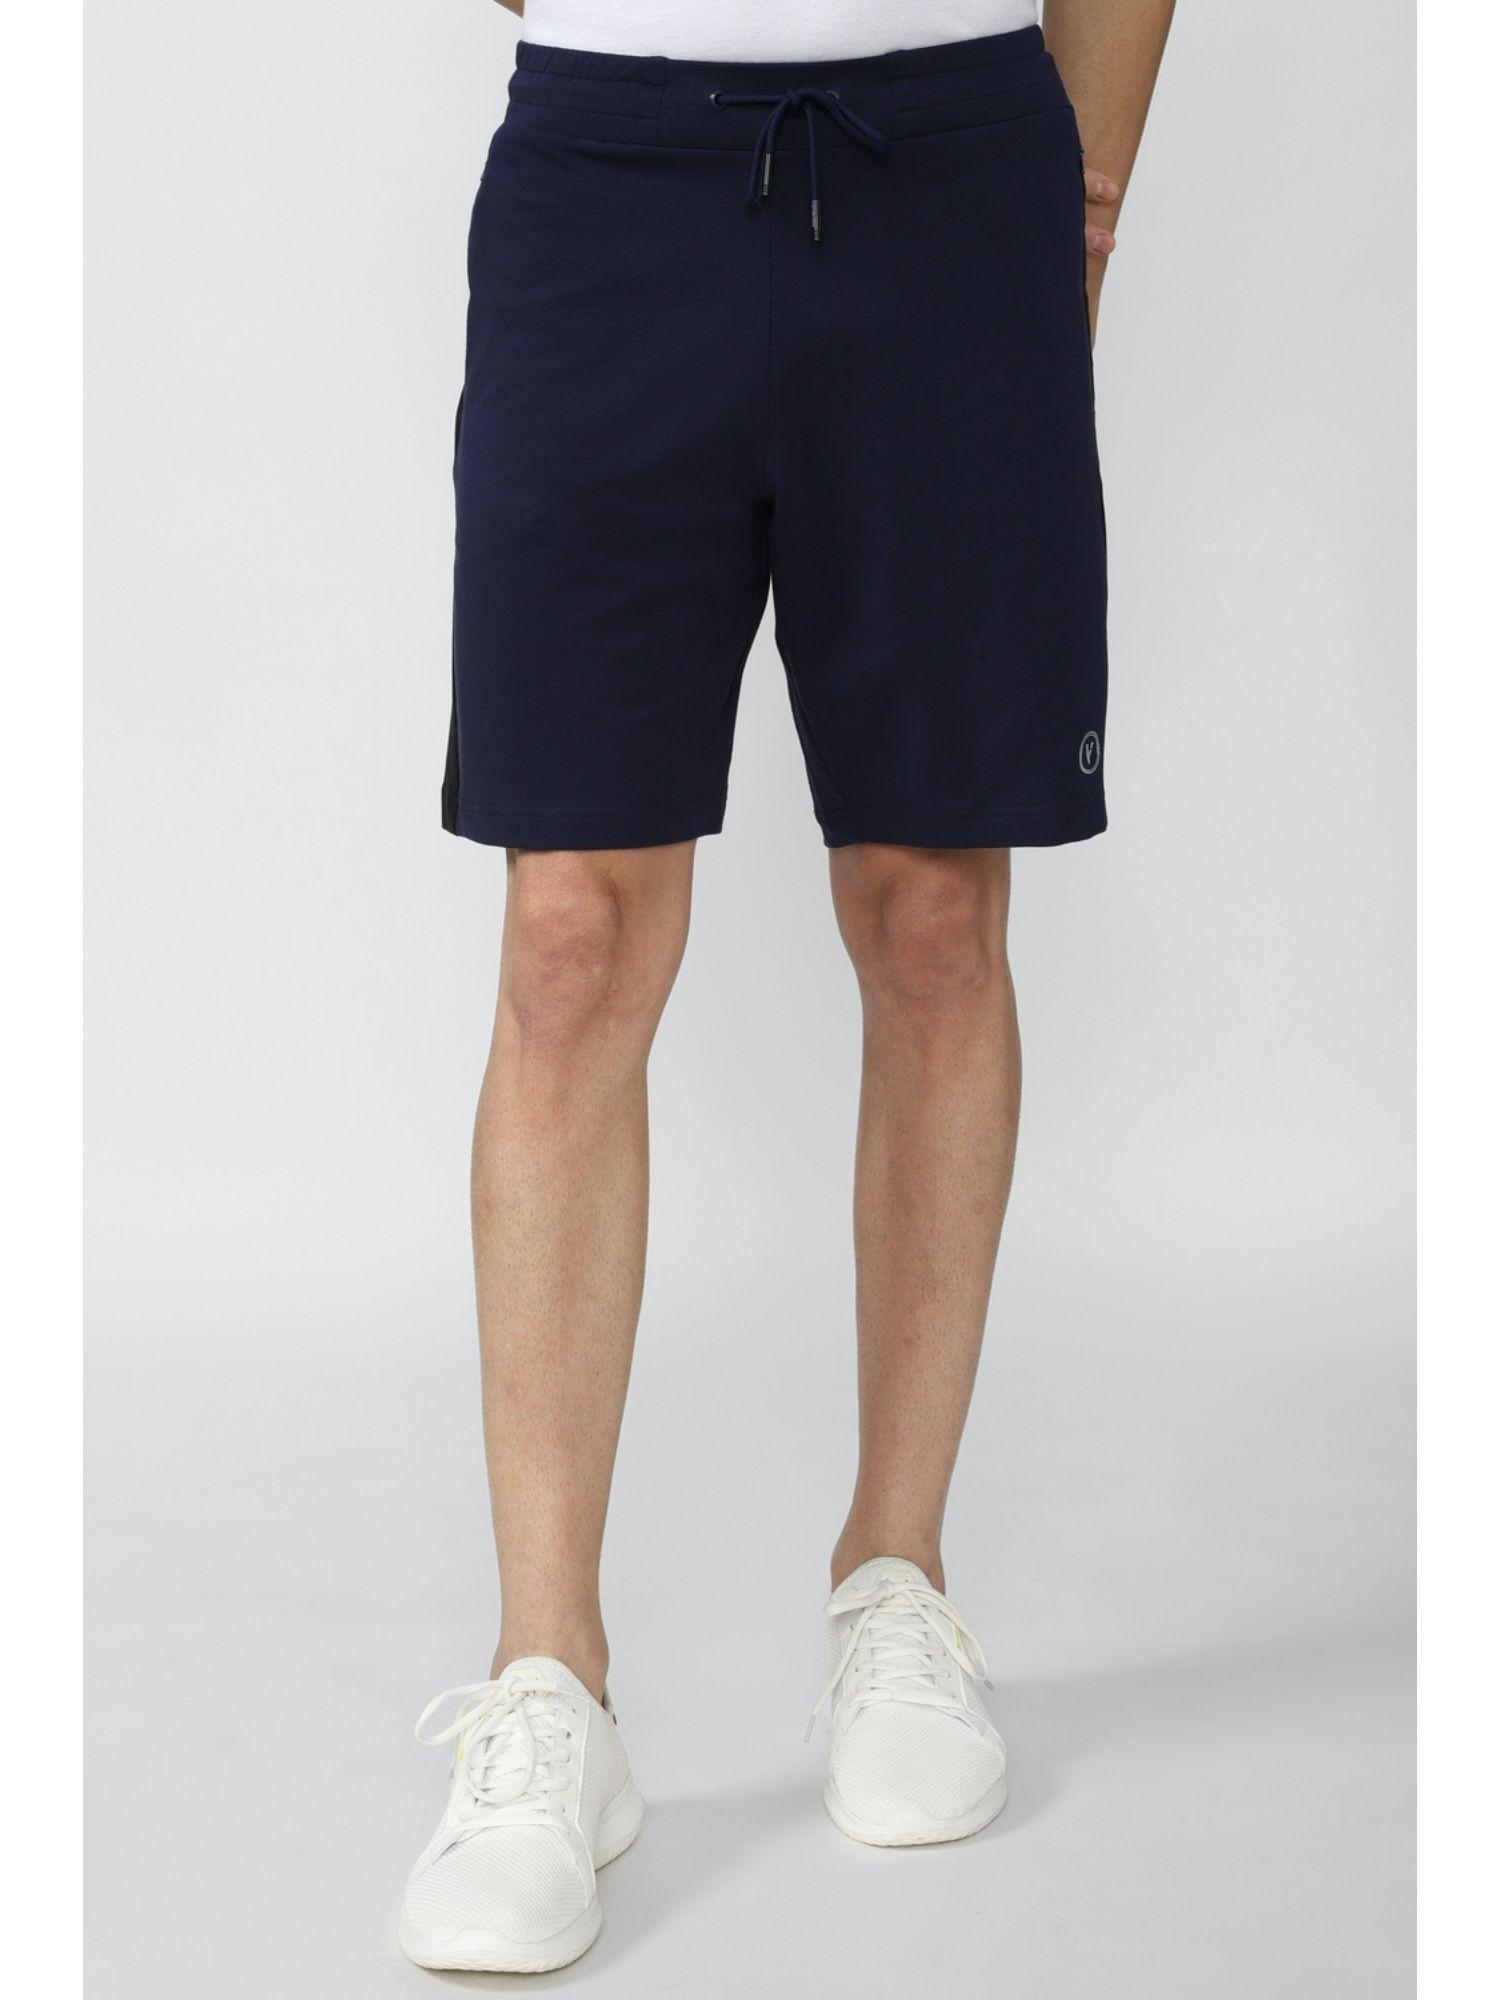 navy-shorts